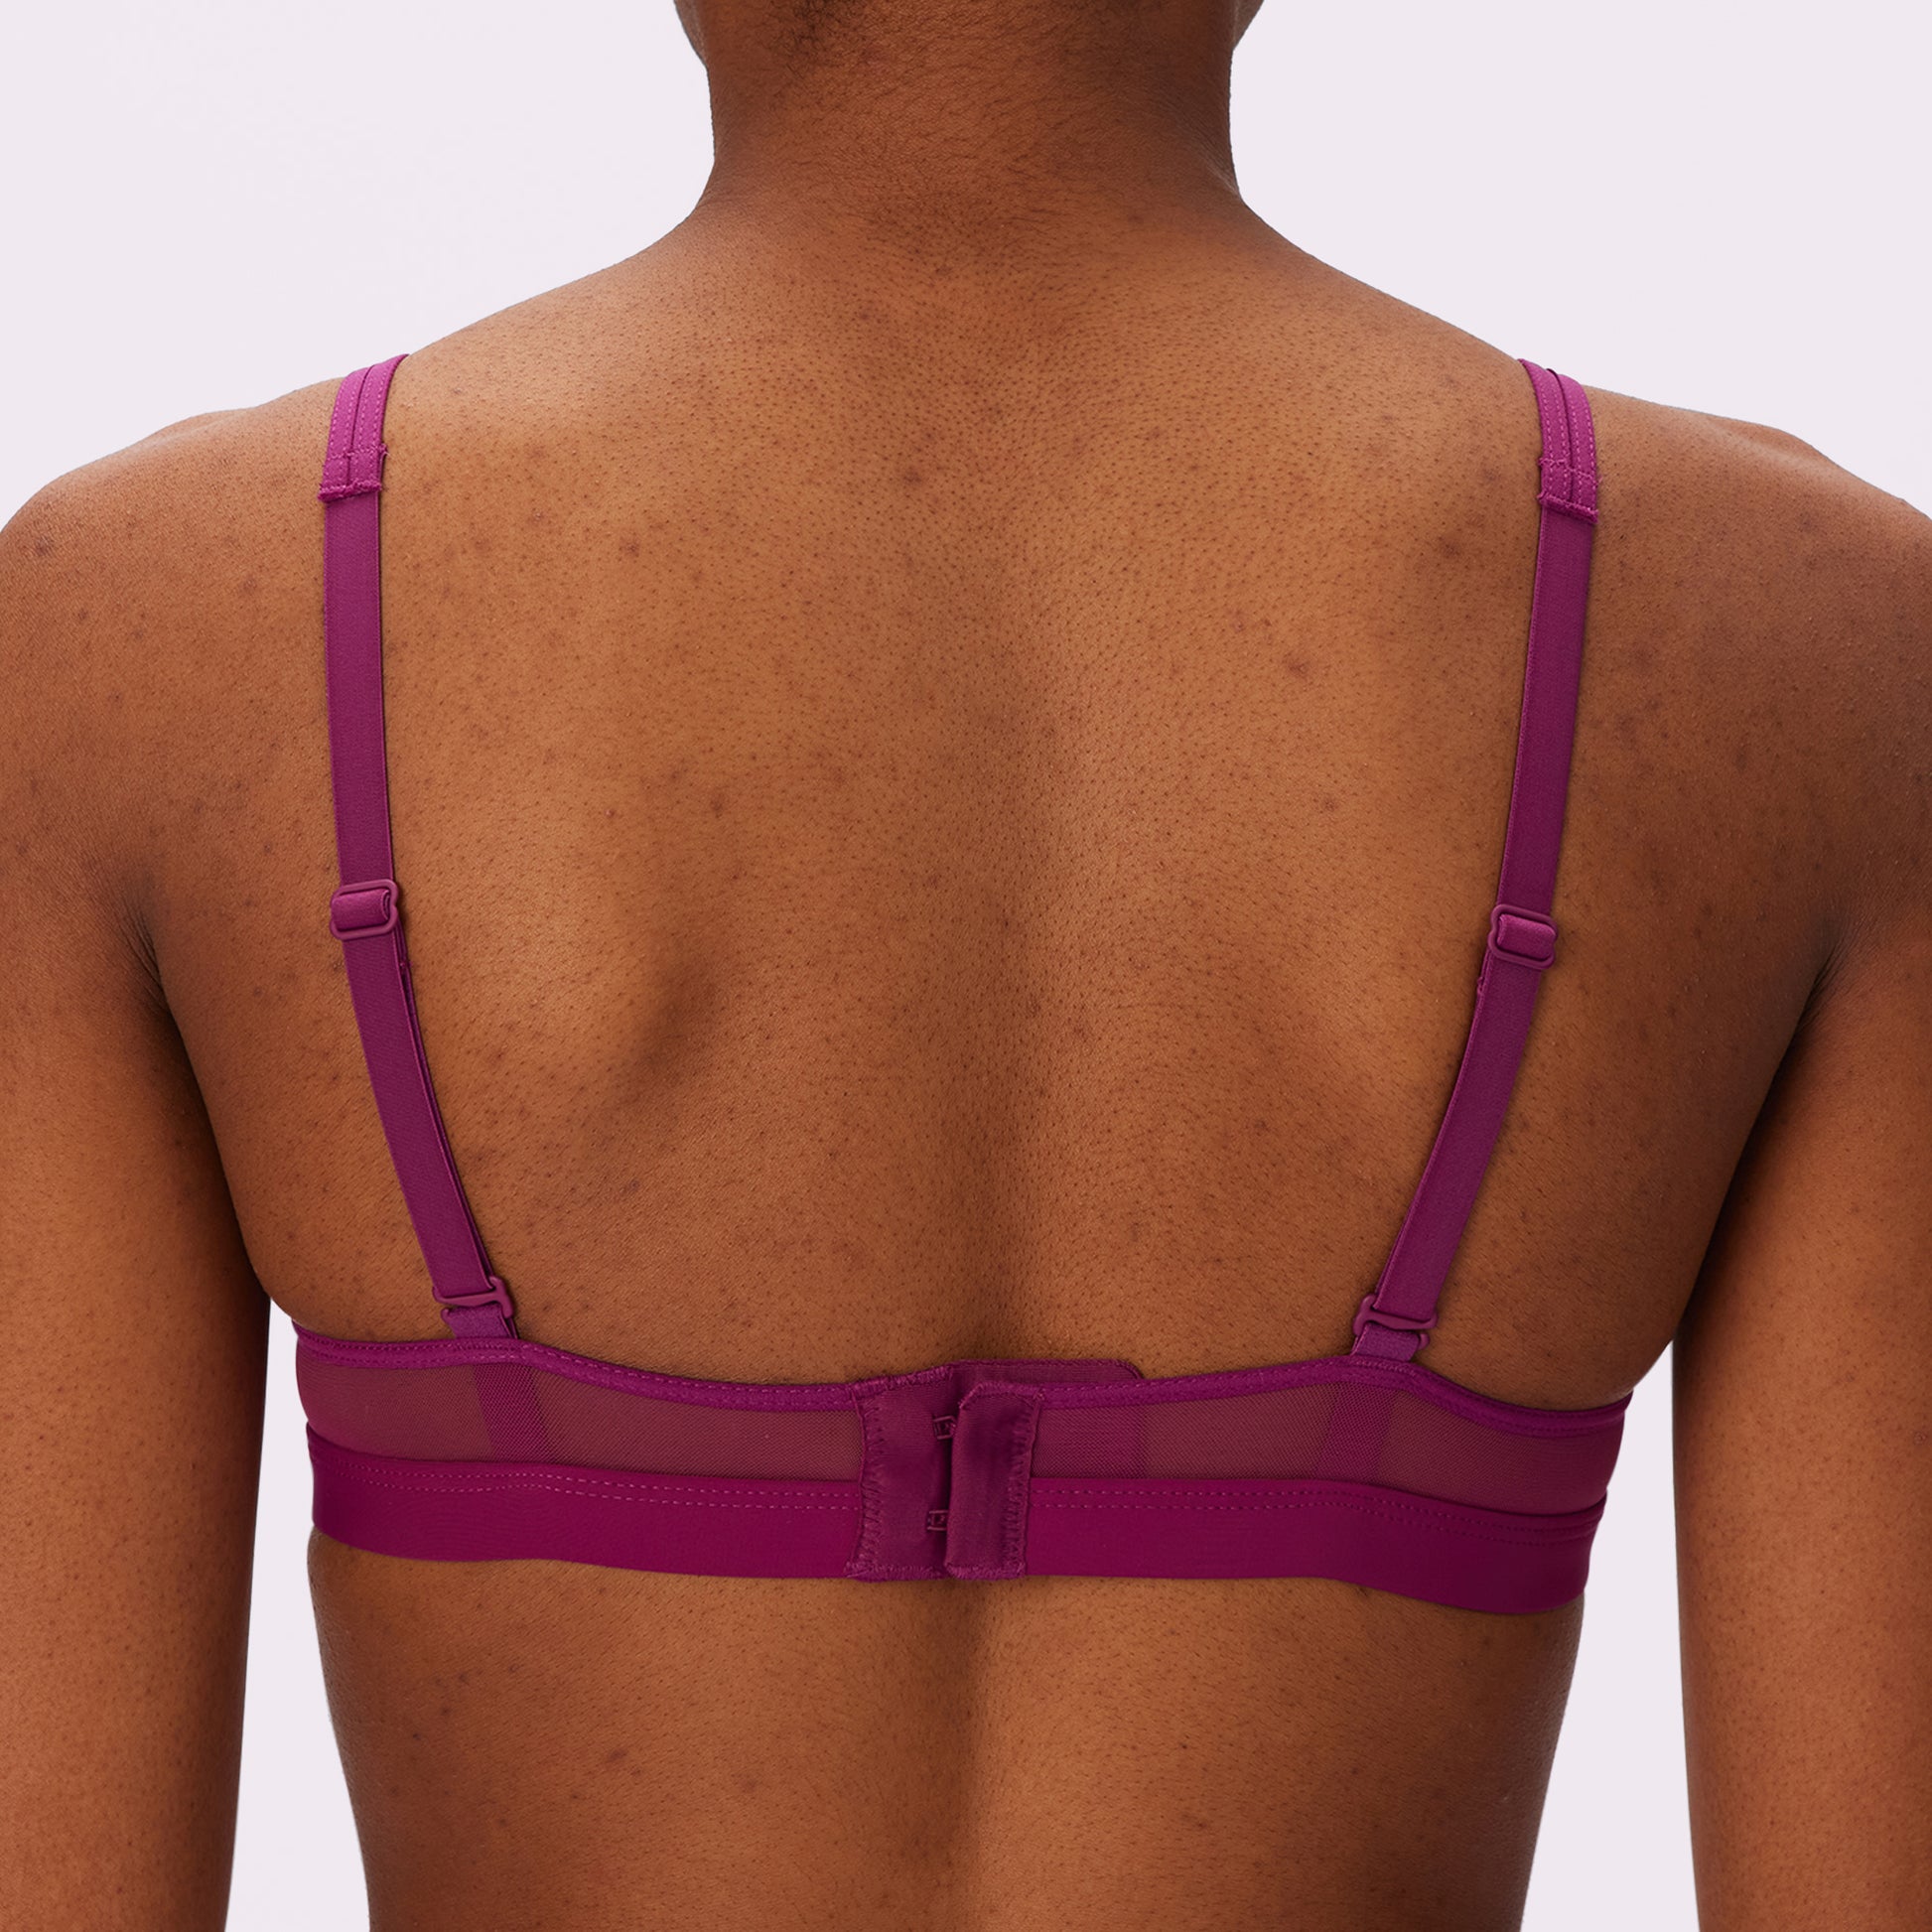 Third Love Shadow Stripe plunge bra 32F Size undefined - $10 - From Rebecca